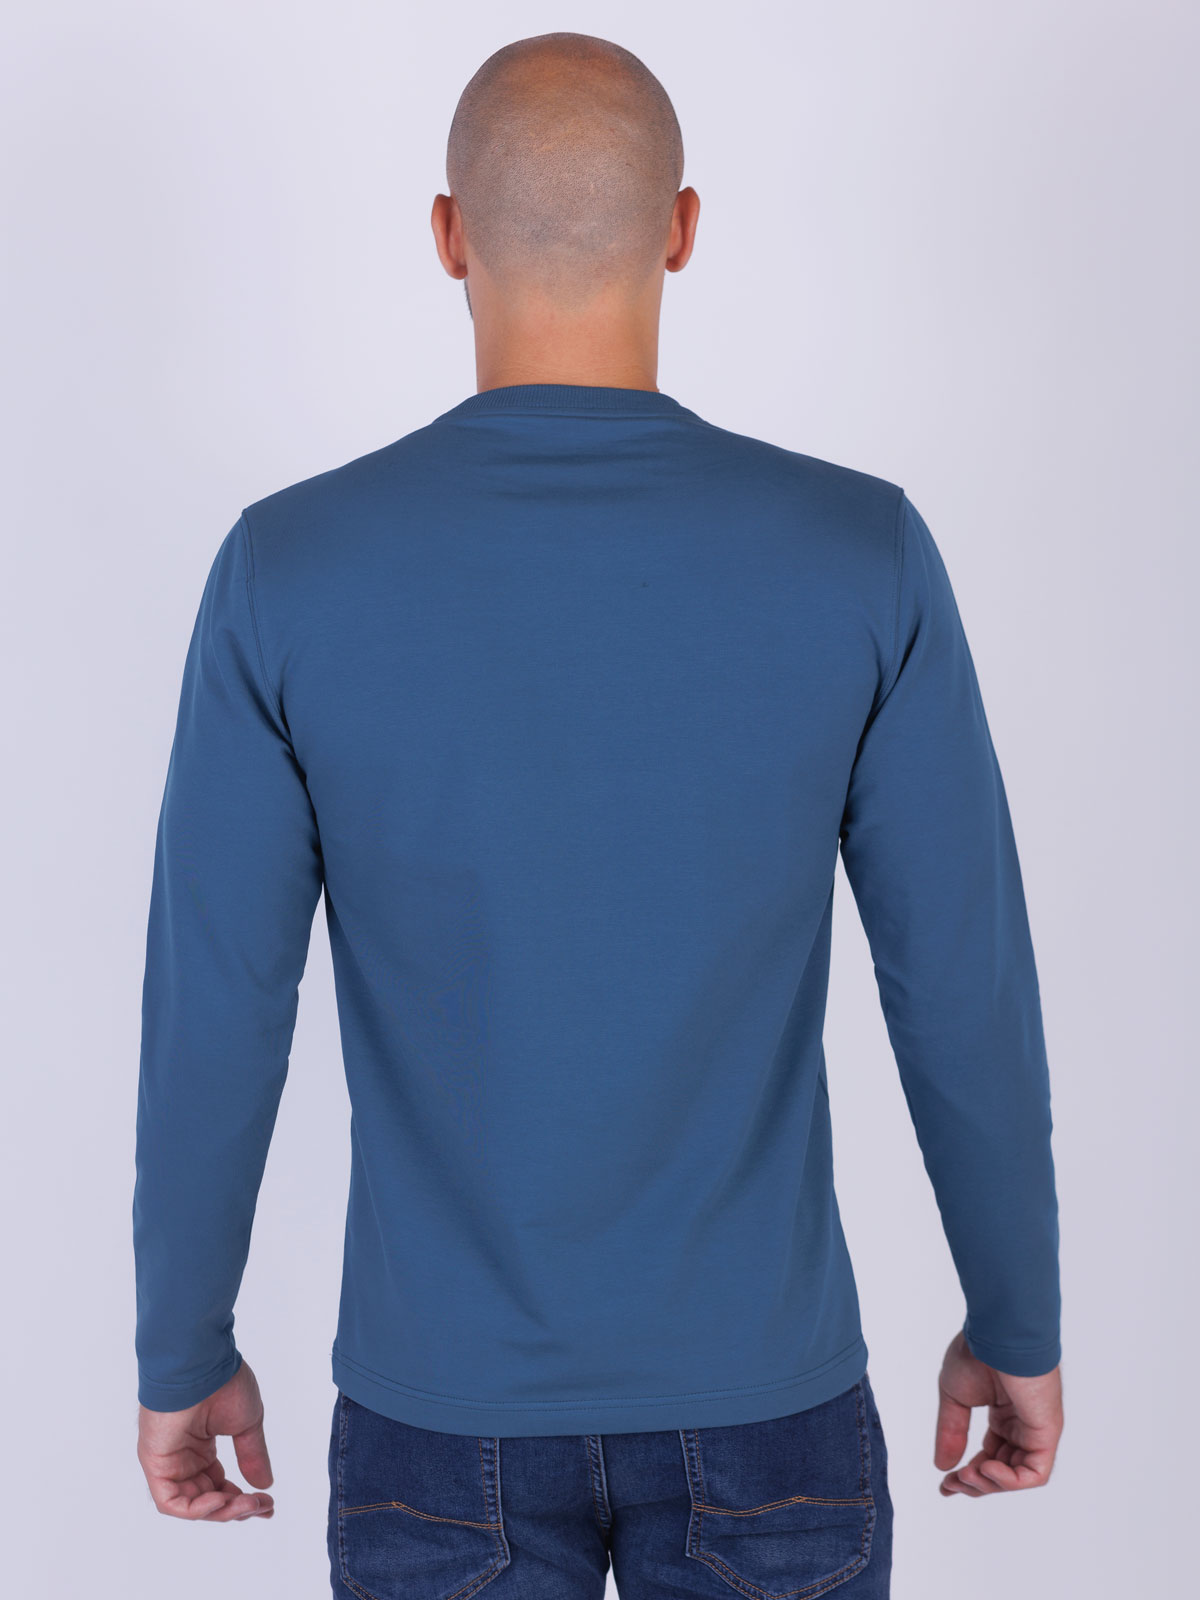 Bluza albastra cu forme geometrice - 42358 € 27.56 img2